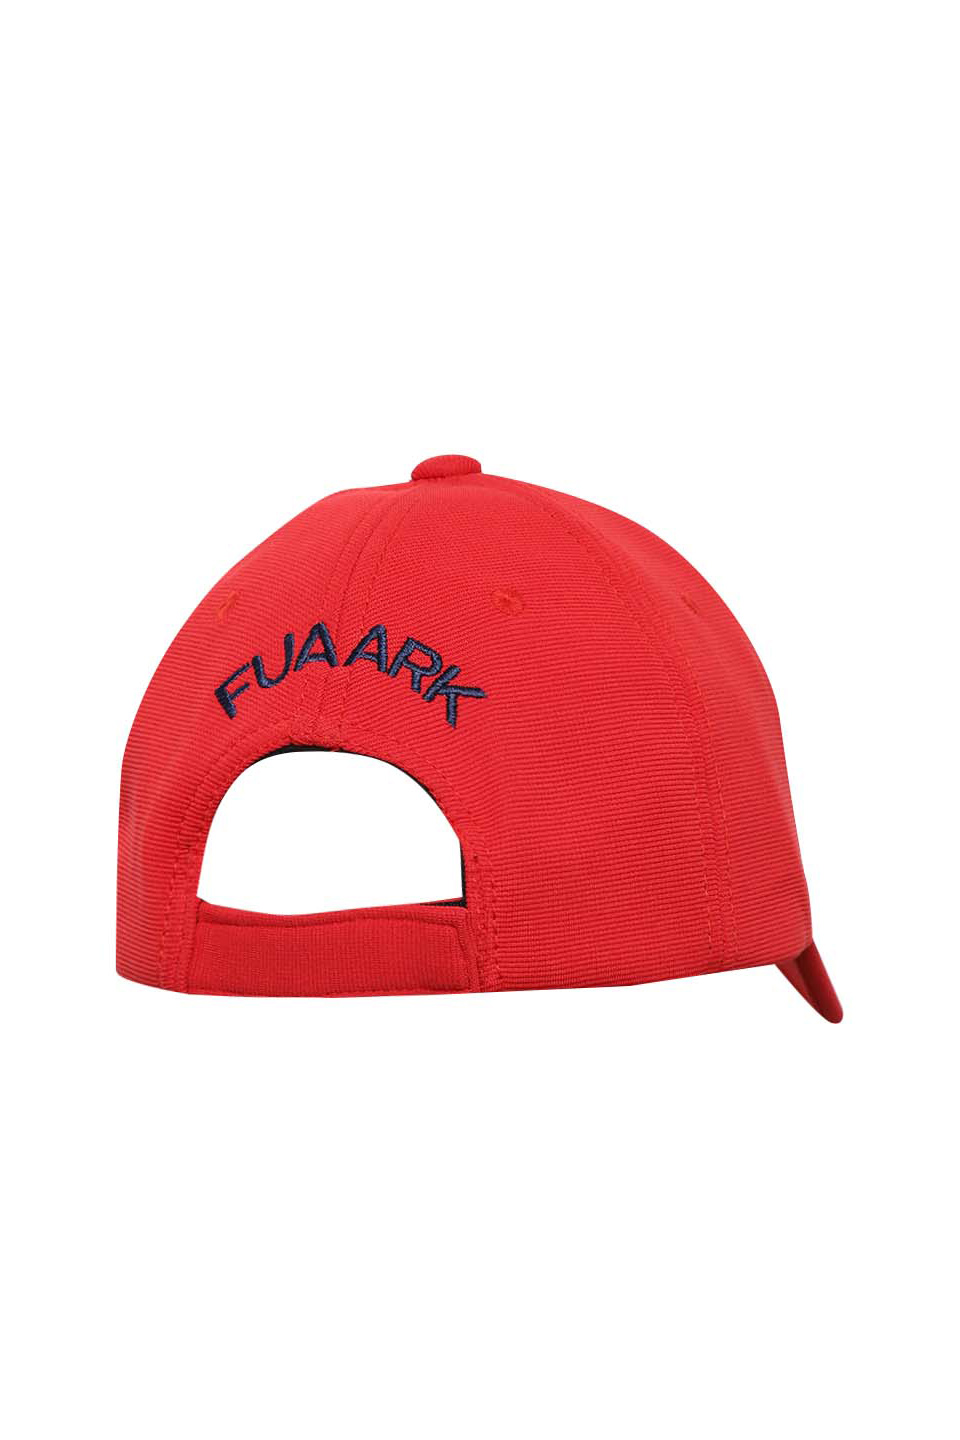 Fuaark Baseball Cap